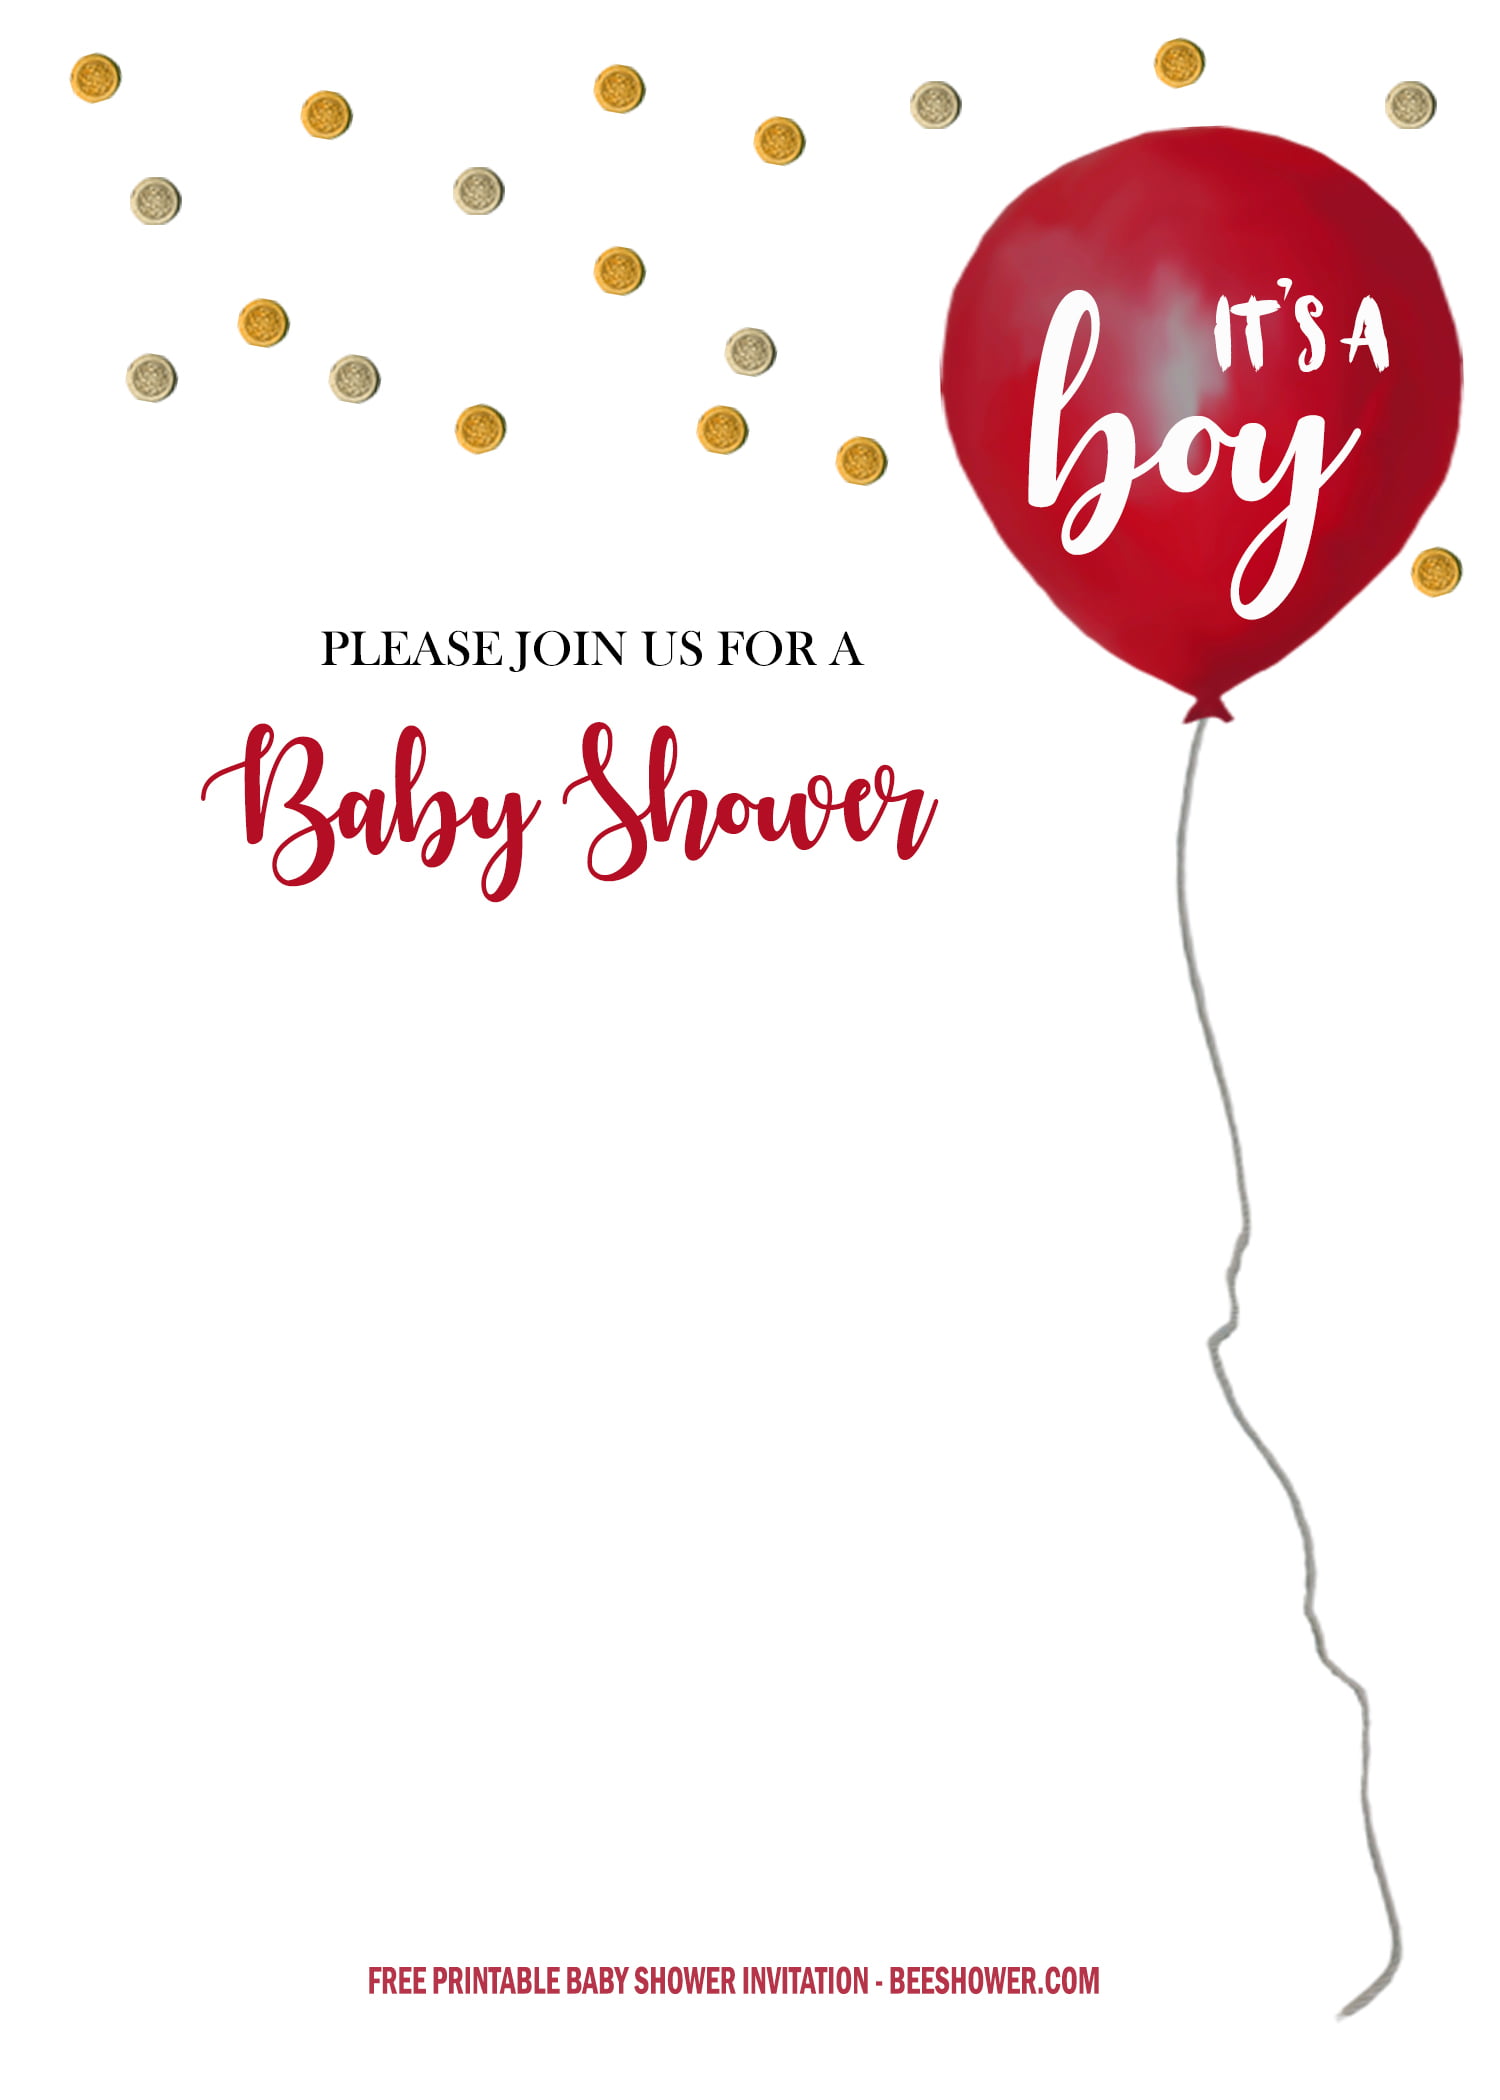 the-best-baby-shower-printable-invitations-derrick-website